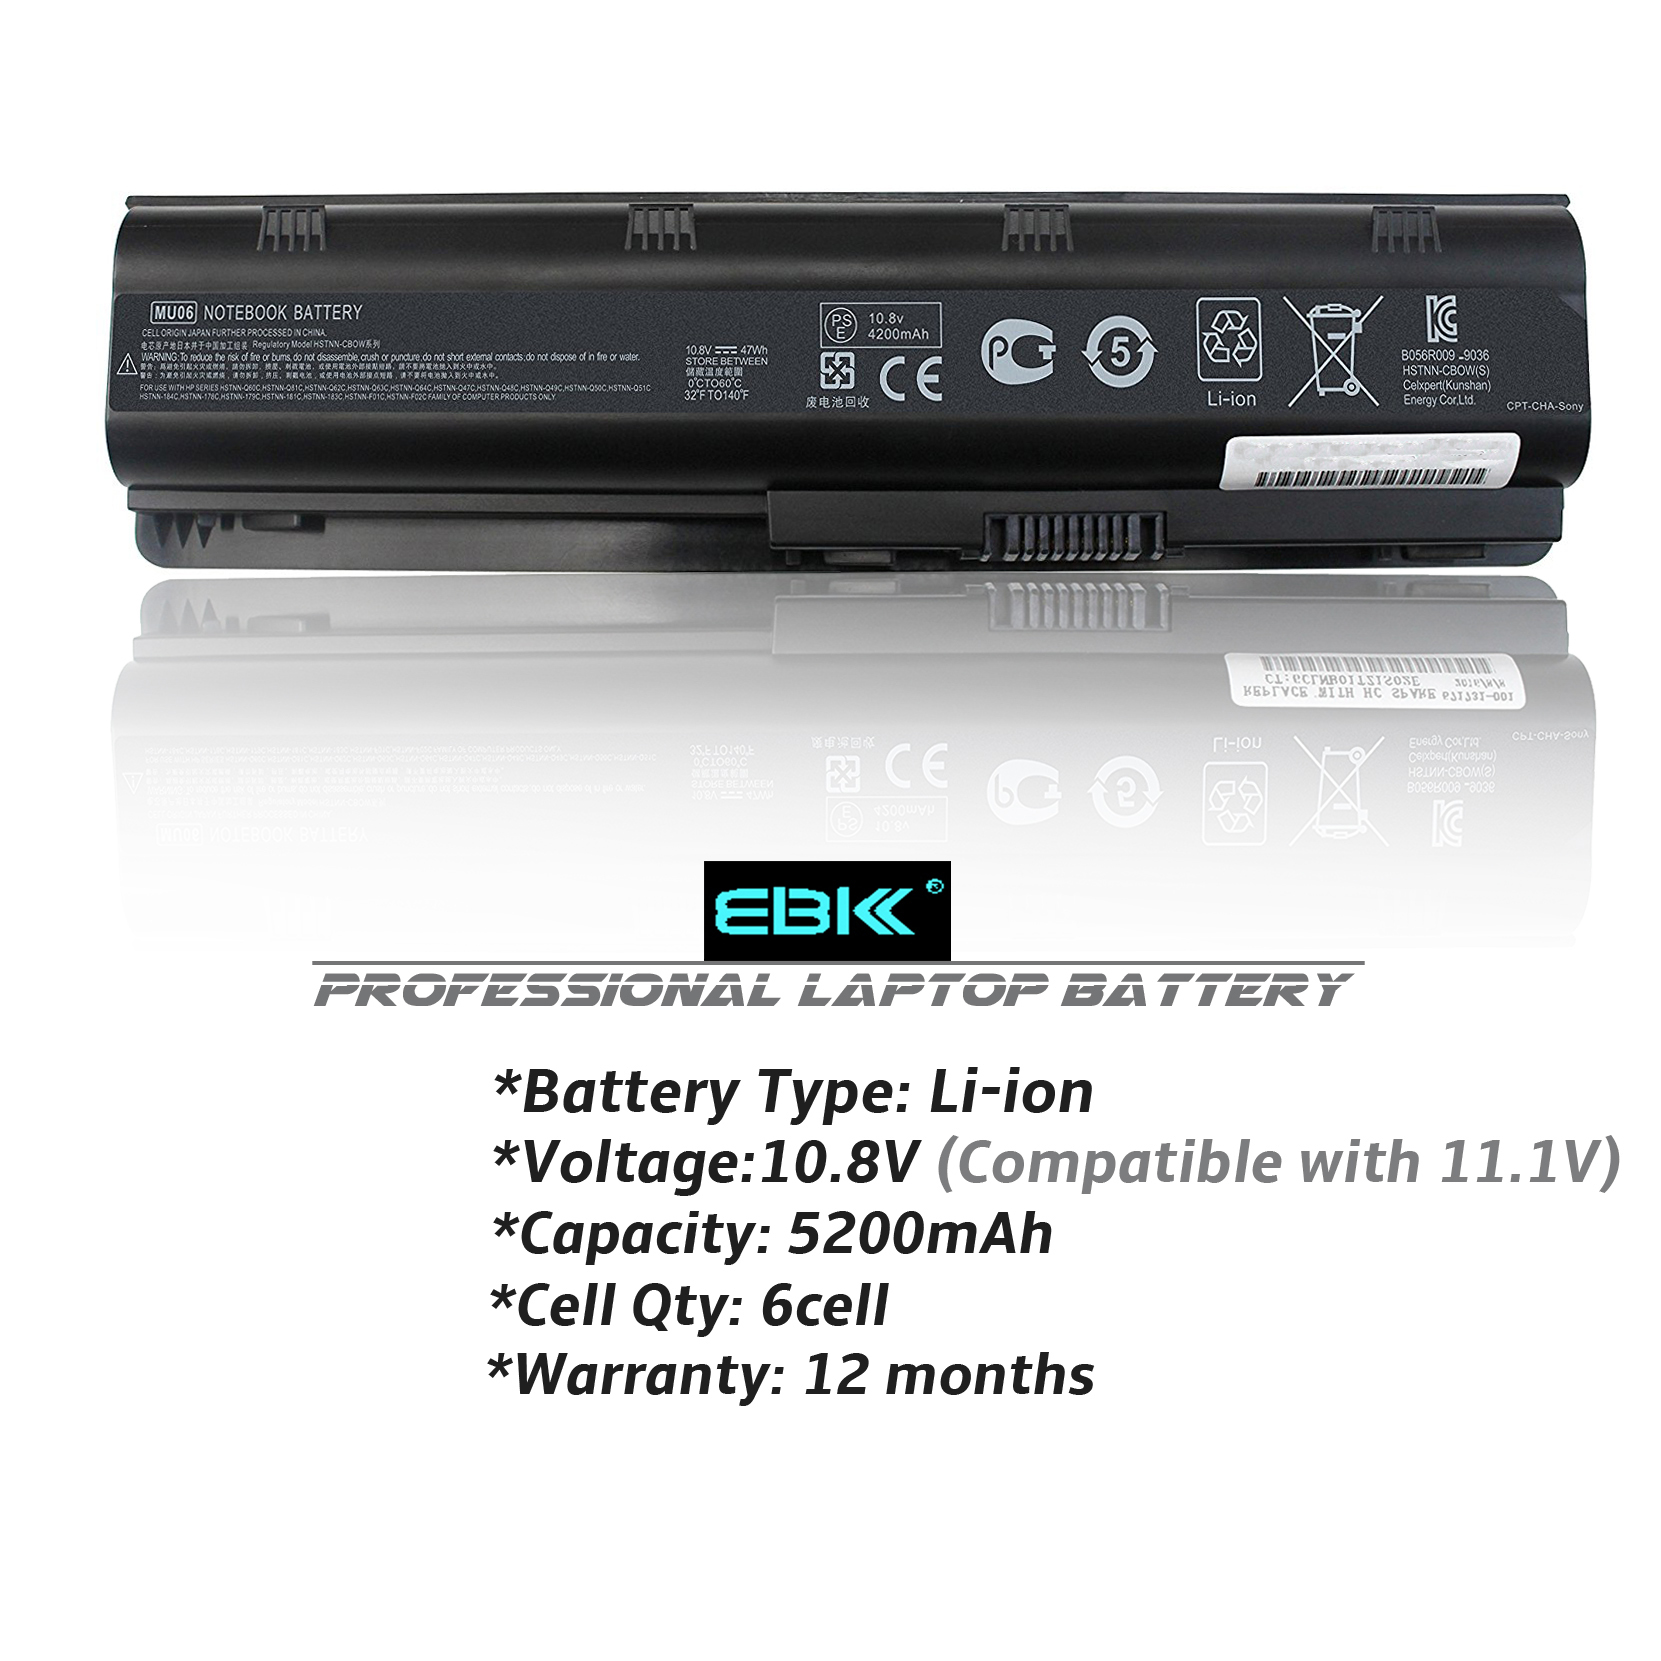 593553-001 - Brand New HP Laptop Battery - MU06 MU09 593554-001 (EXTENDED LIFE) EBK - 12 months warranty - image 2 of 8